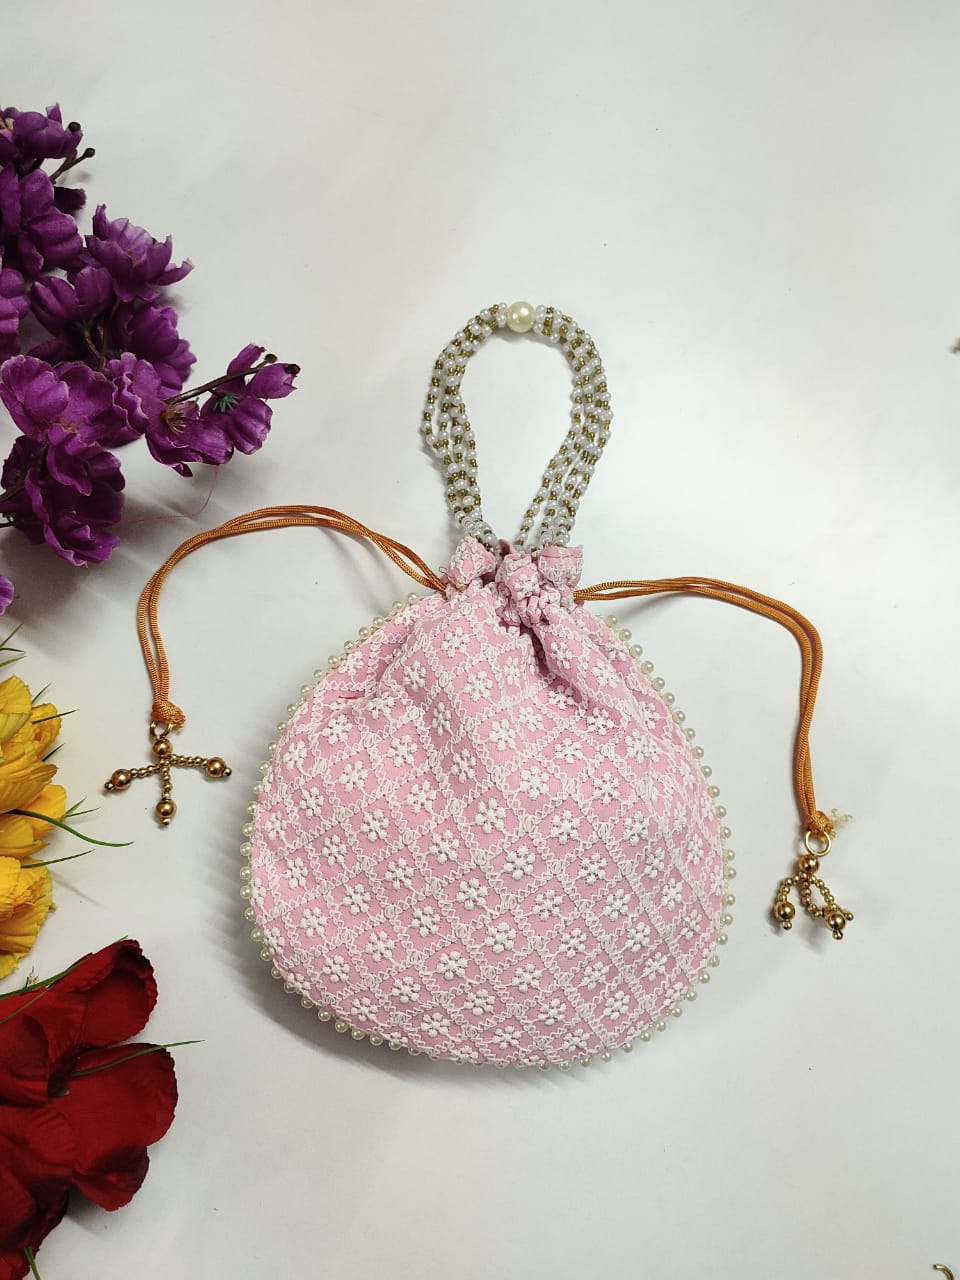 LAMANSH ® Women's Potli Bag Pack of 12 / Assorted Colour Patterns LAMANSH 12 Pcs Chikankari Potli bags for women handbags traditional Indian Wristlet with Drawstring Ethnic Embroidery Women Fashion Potli